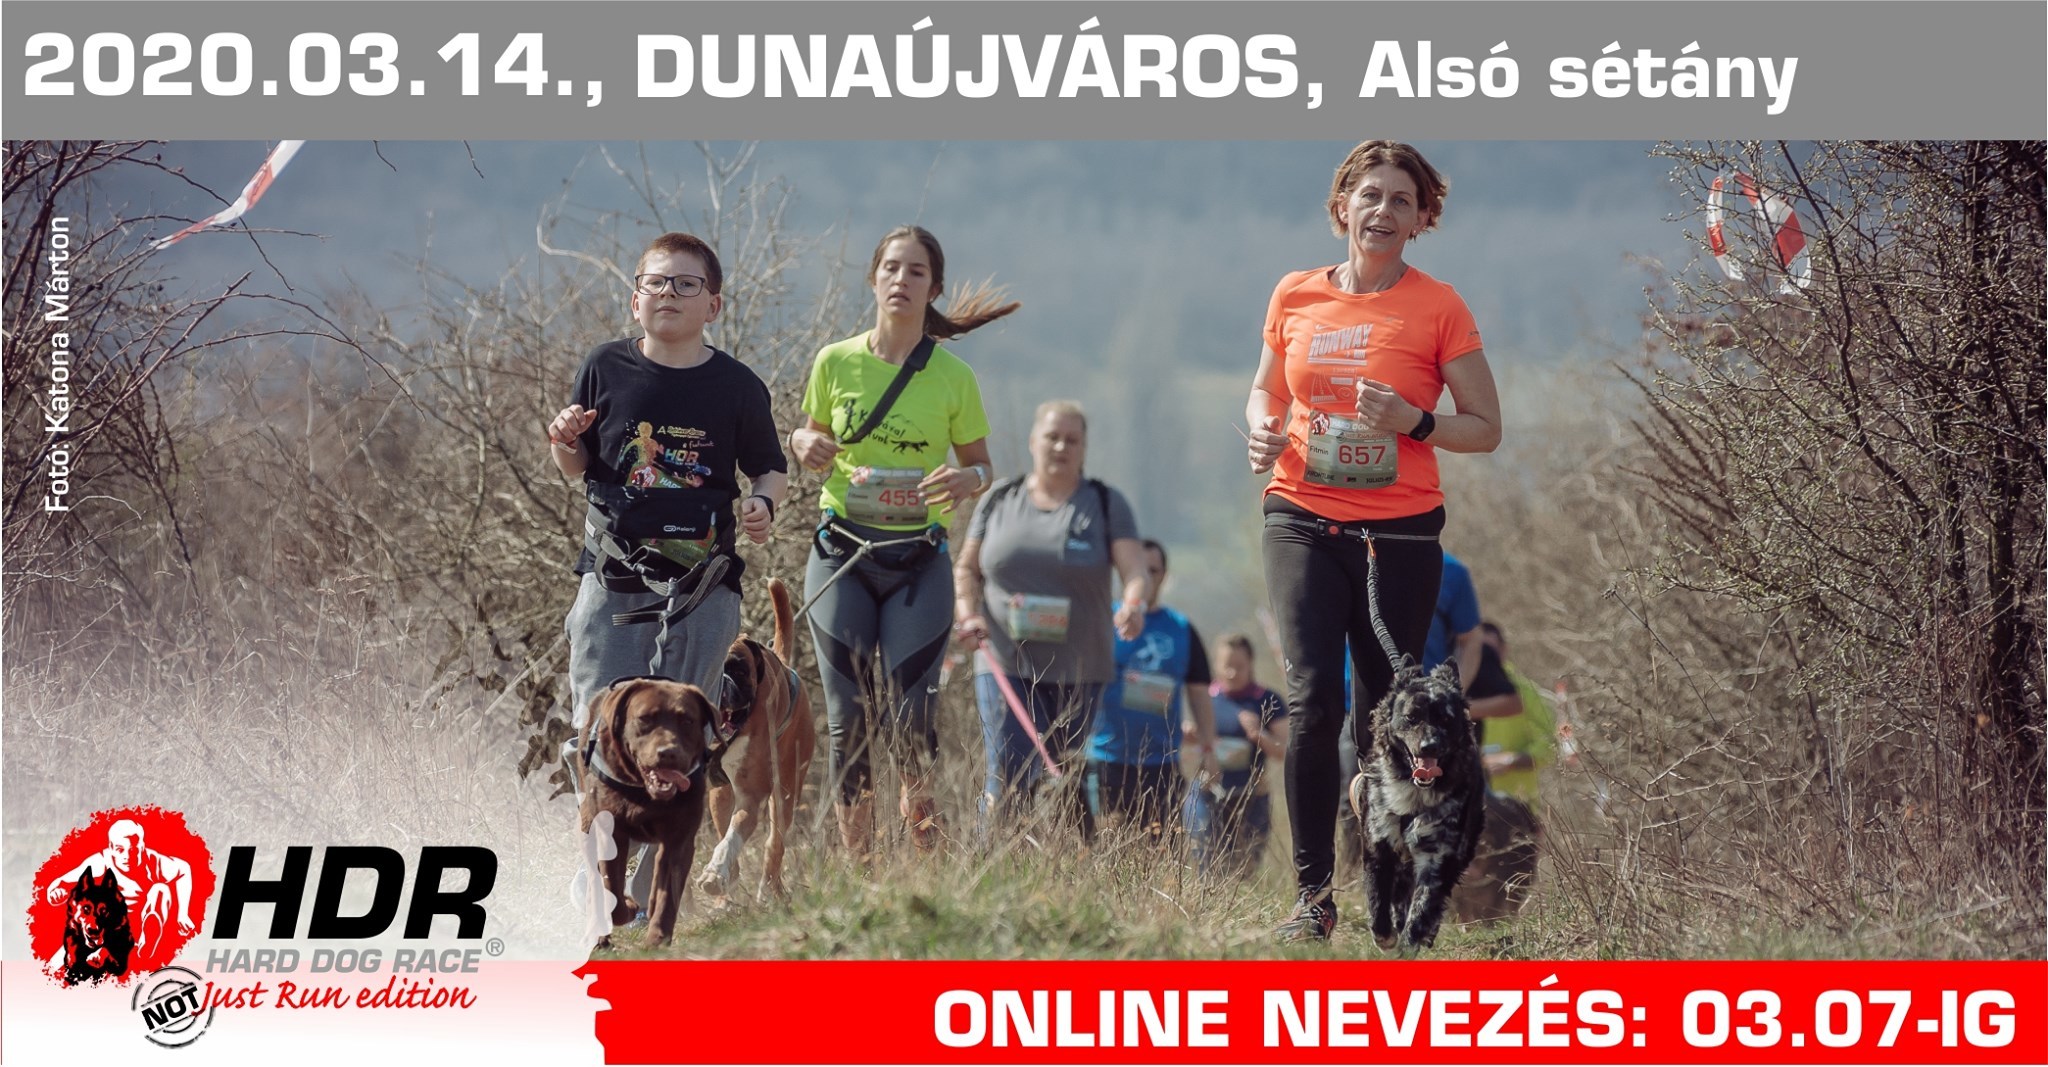 Hard Dog Race - Not Just Run (Felnőtt-Csapat-Junior)